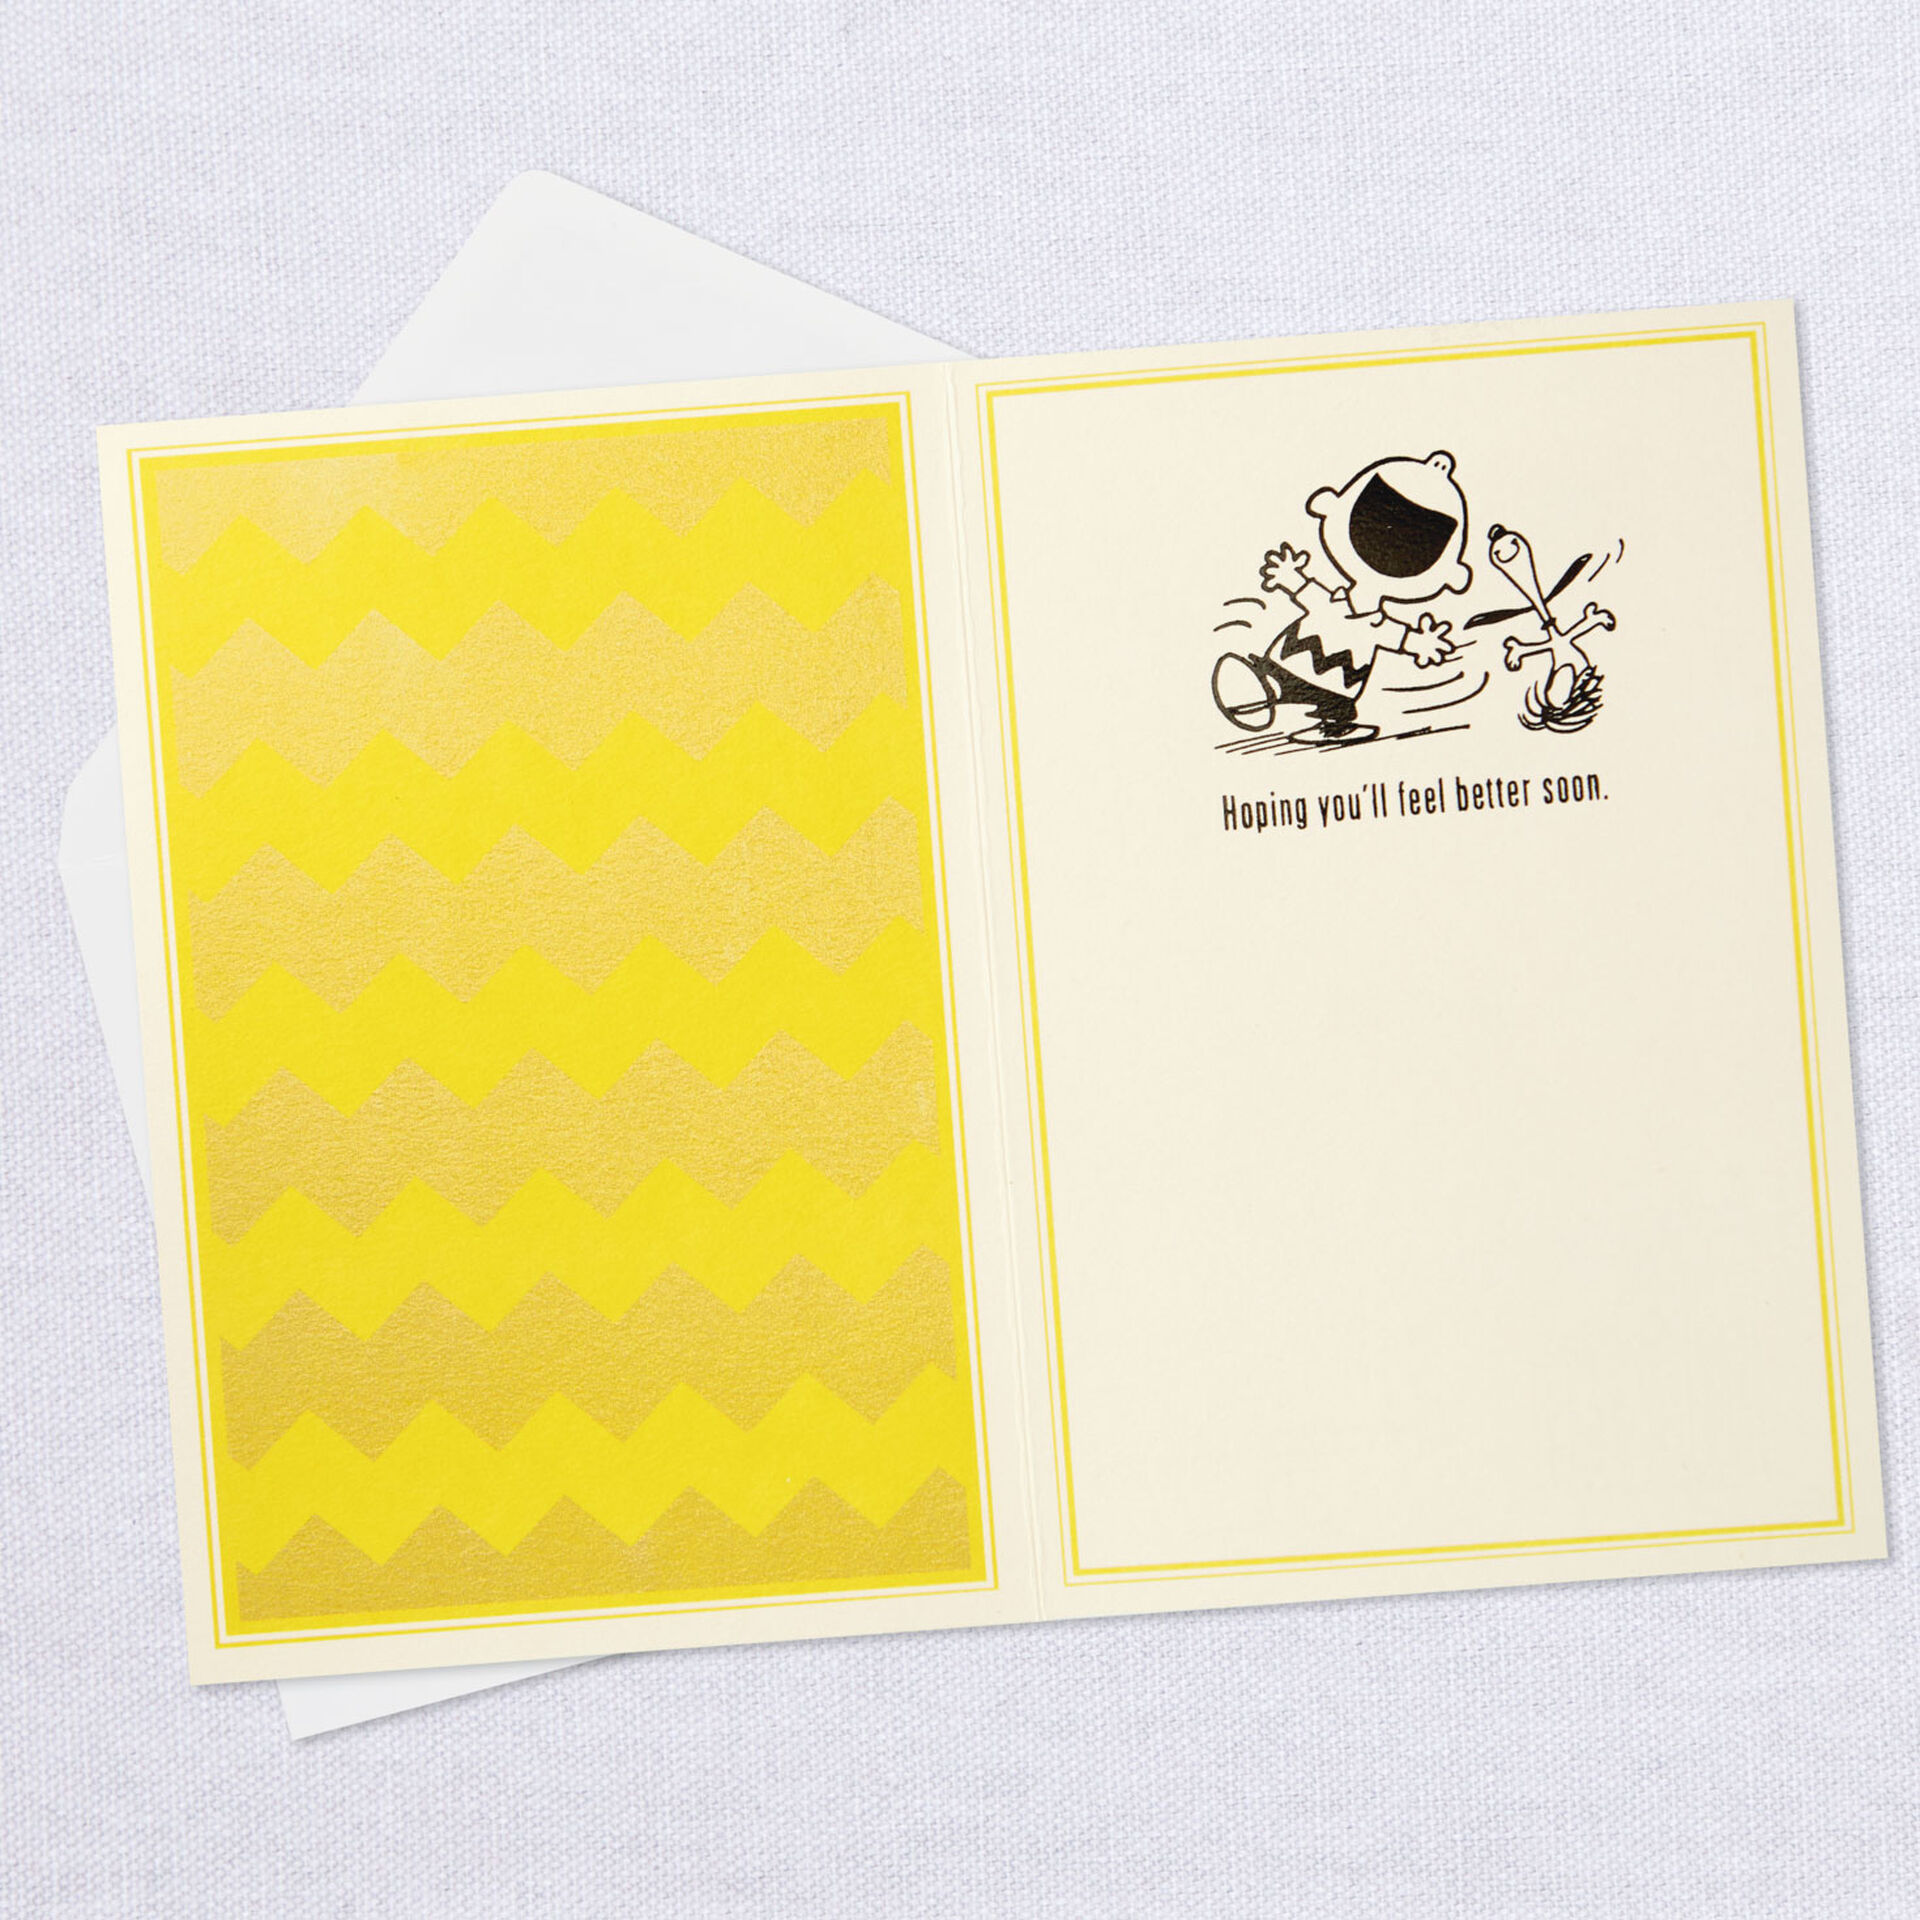 Charlie-Brown-and-Snoopy-Sending-Hugs-Get-Well-Card_459C3319_03